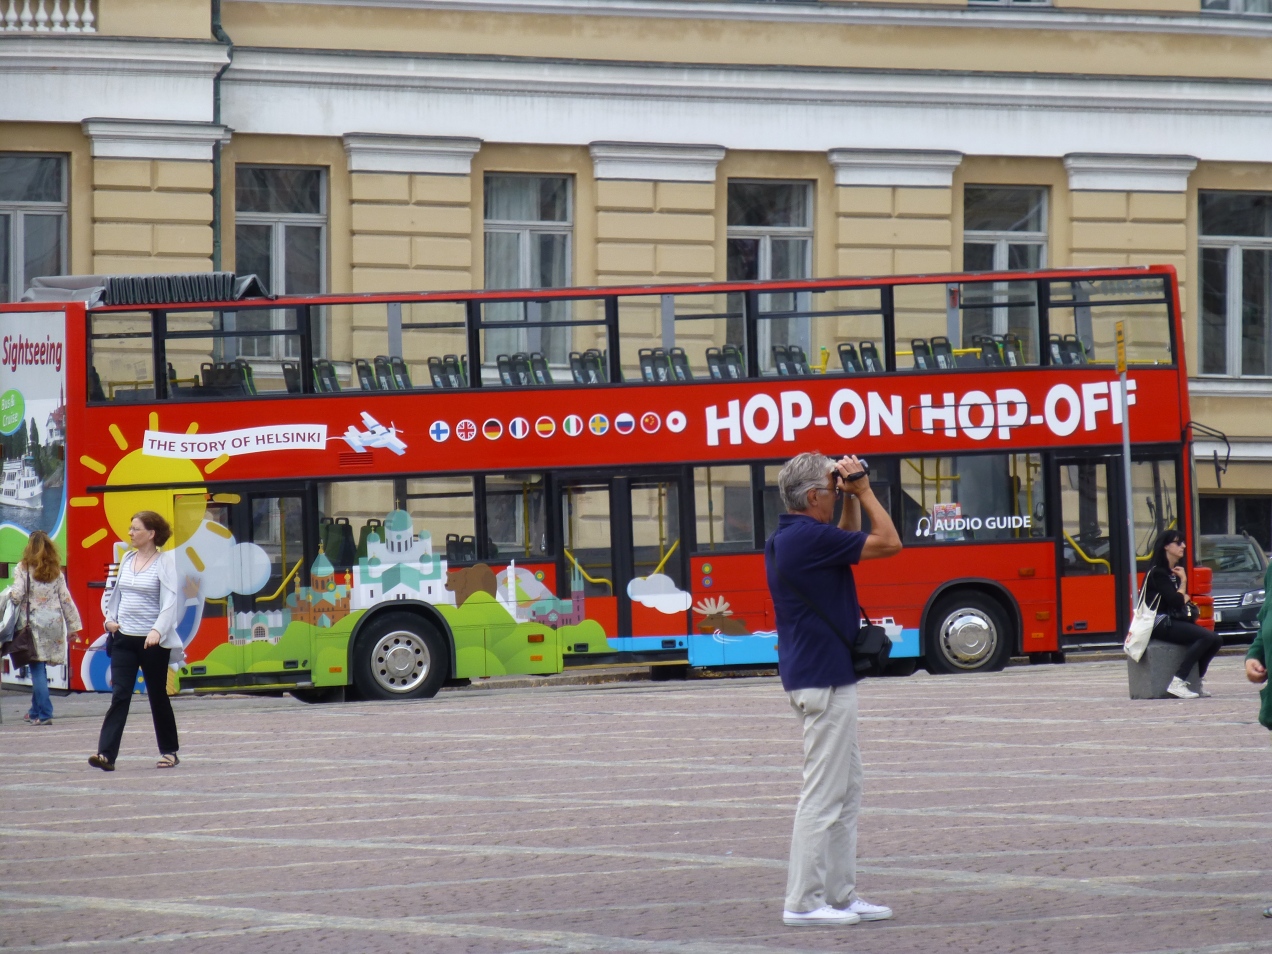 Big Red Bus in Helsinki